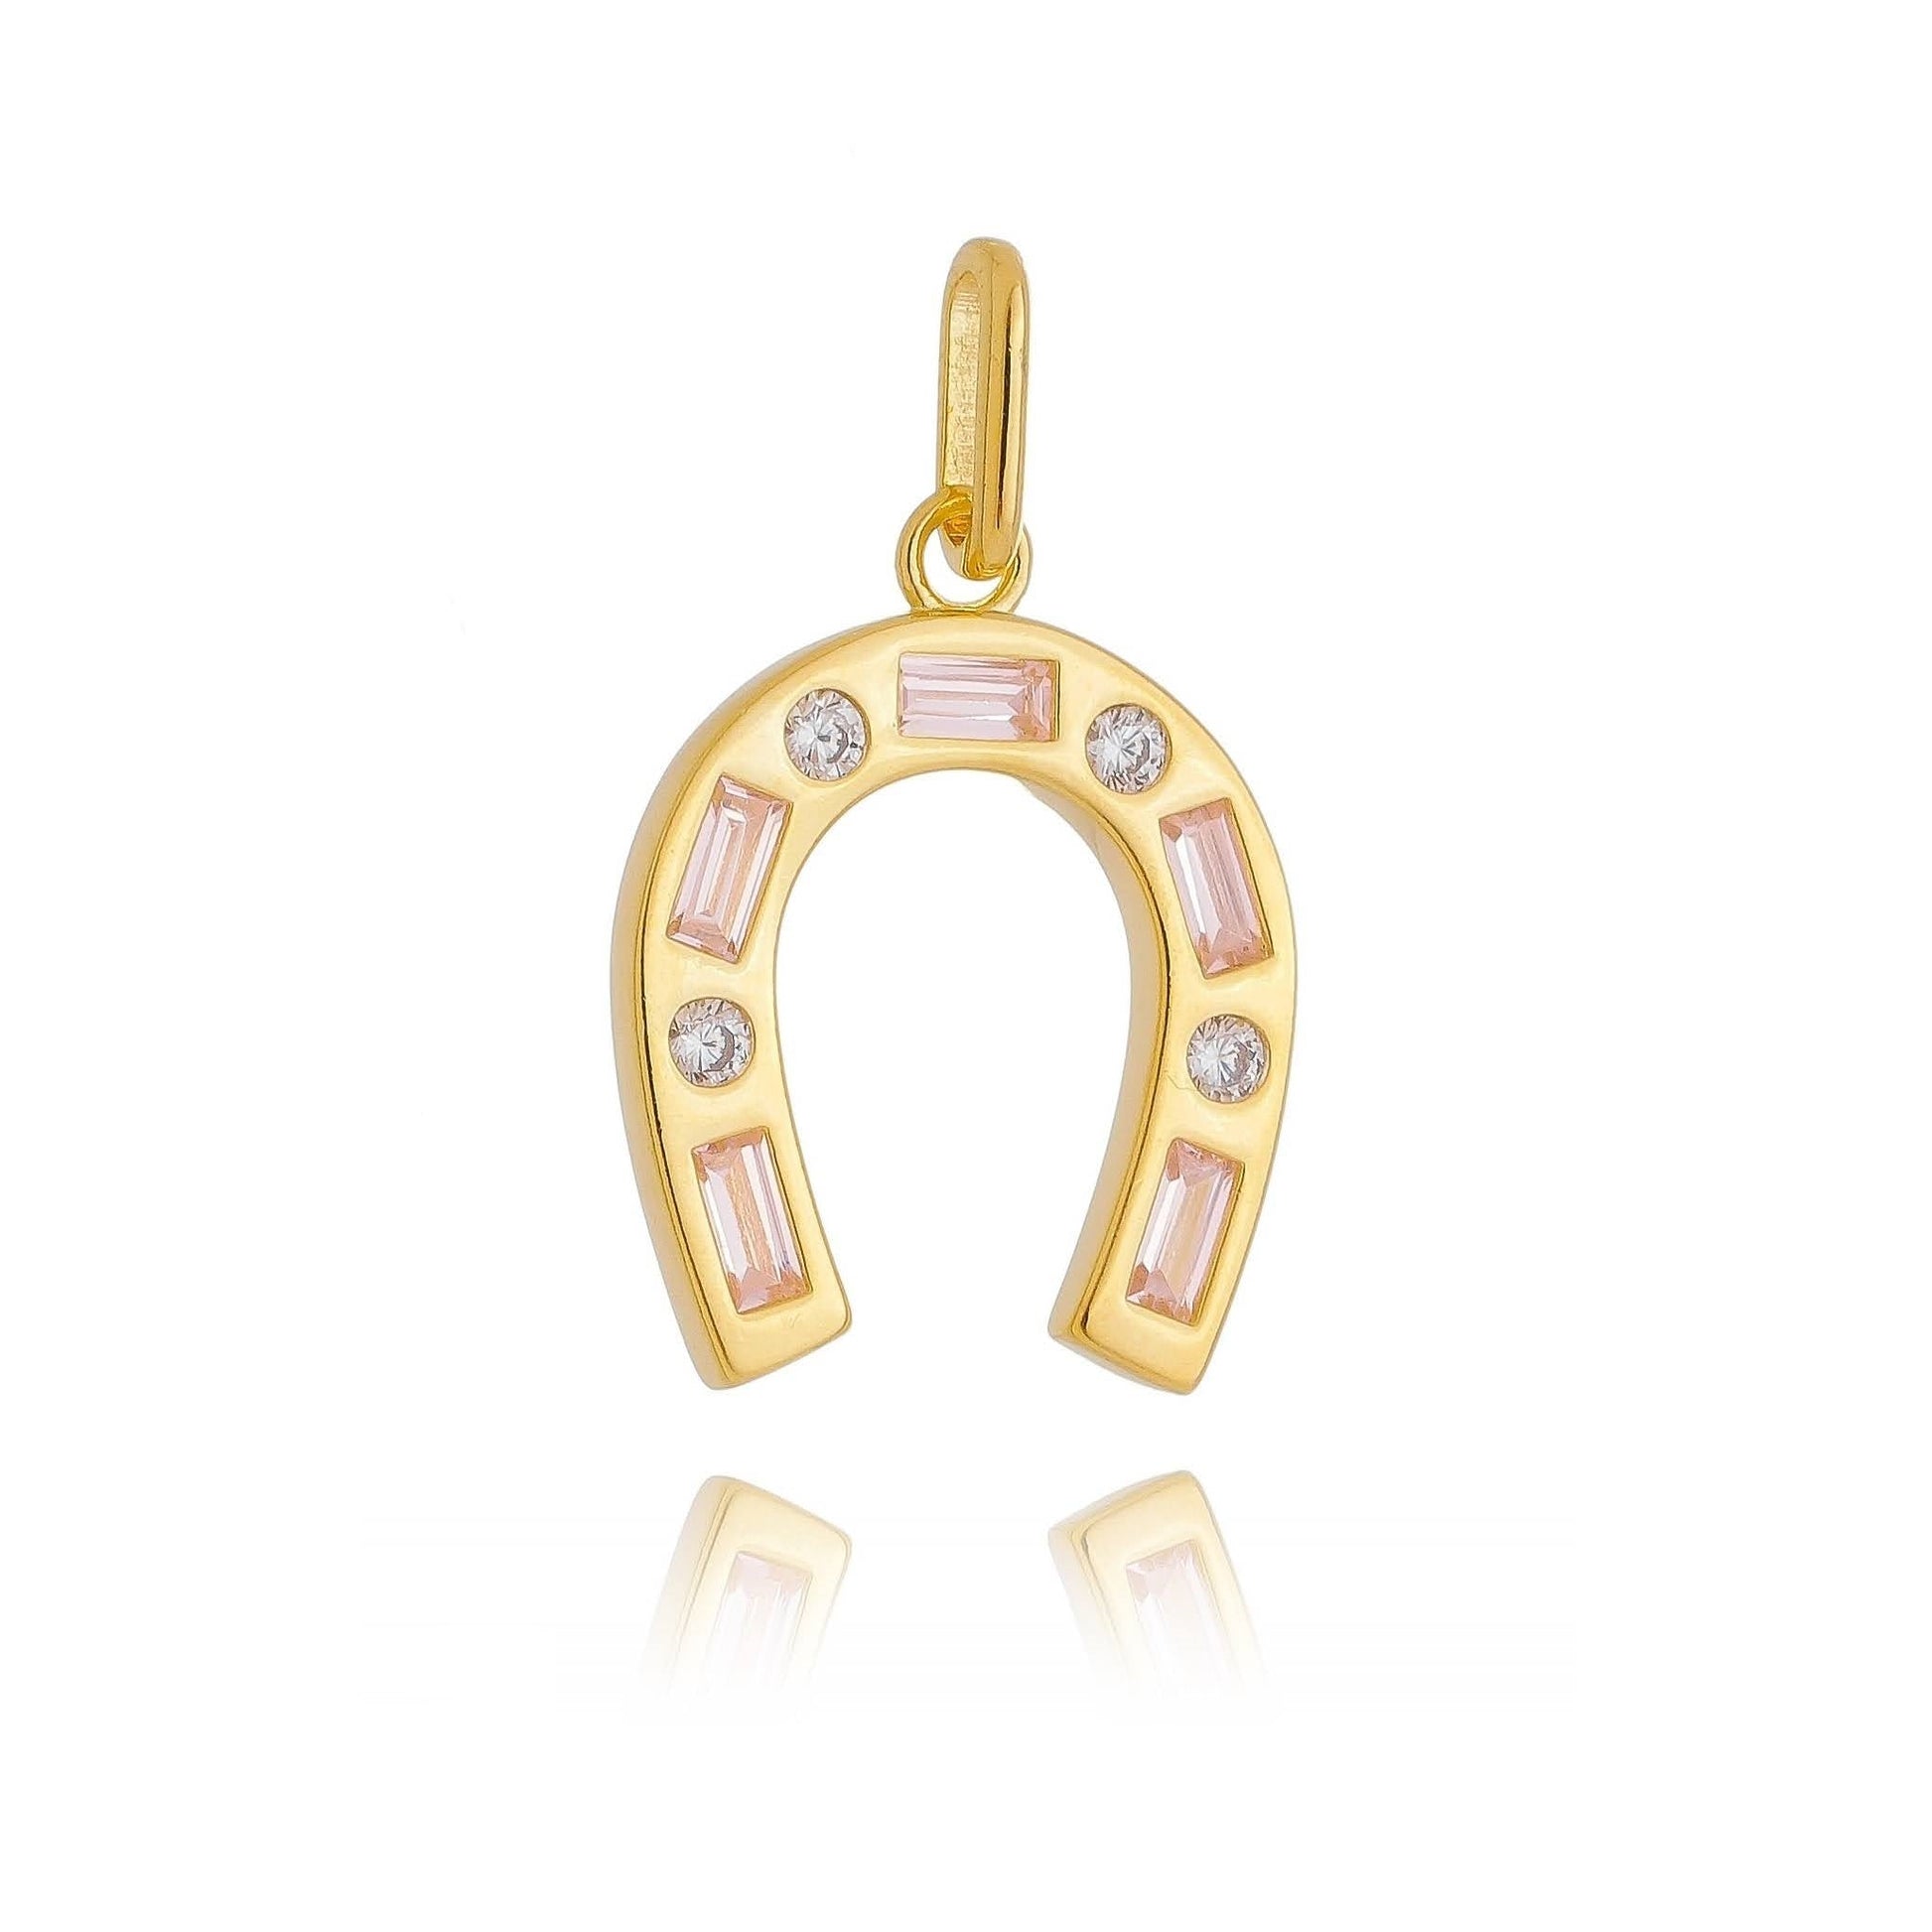 GoldFi 18k Gold Filled Horseshoe Pendant Featuring Cubic Zirconia Pink Baguette